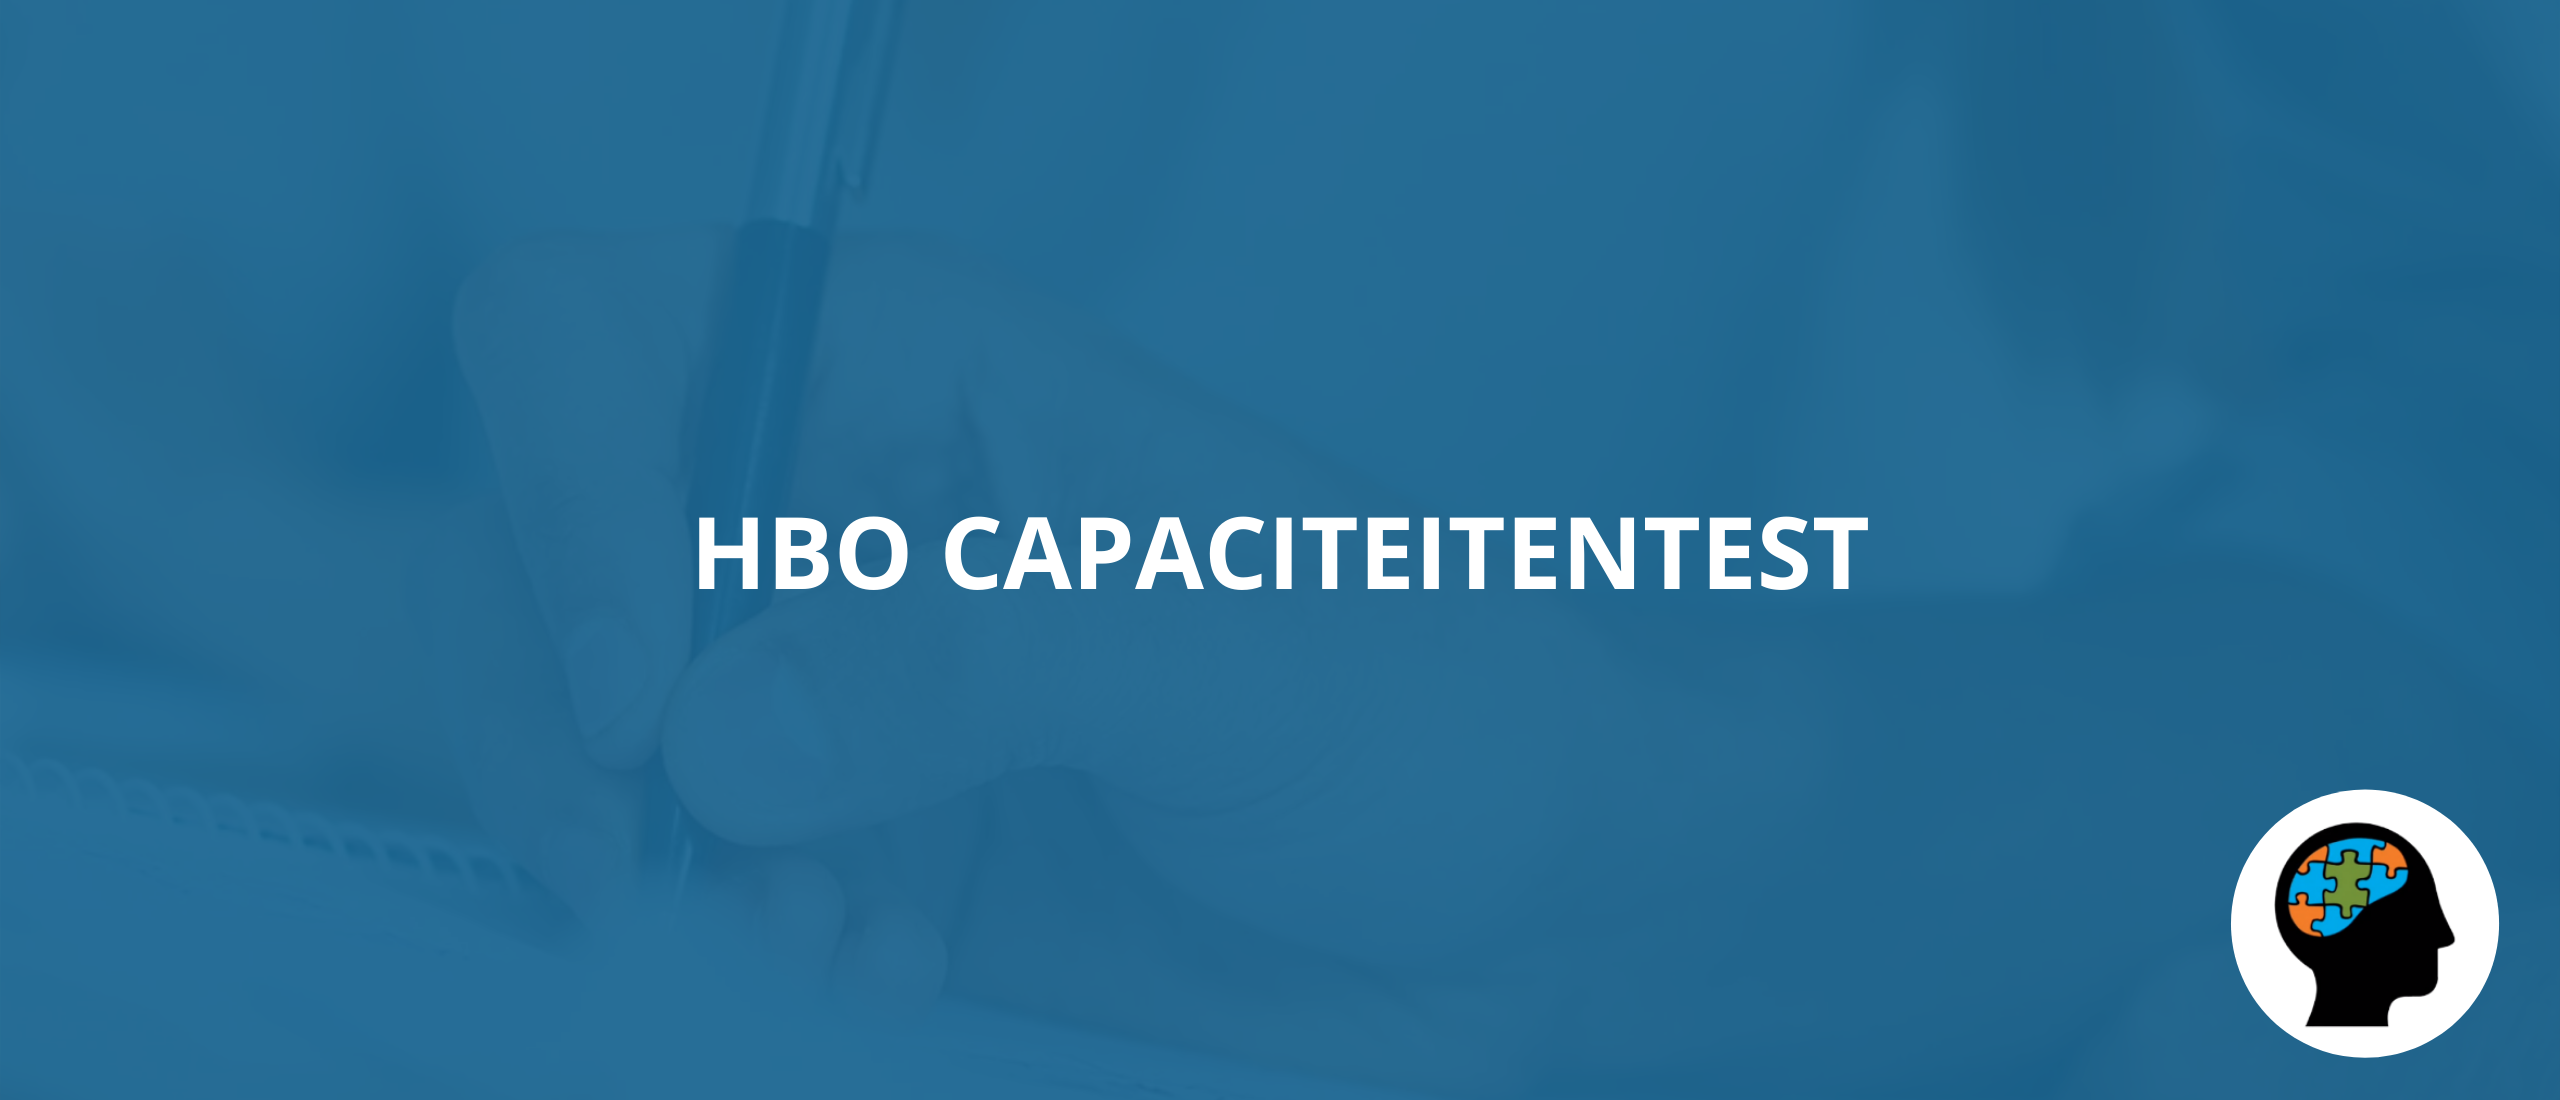 HBO capaciteitentest